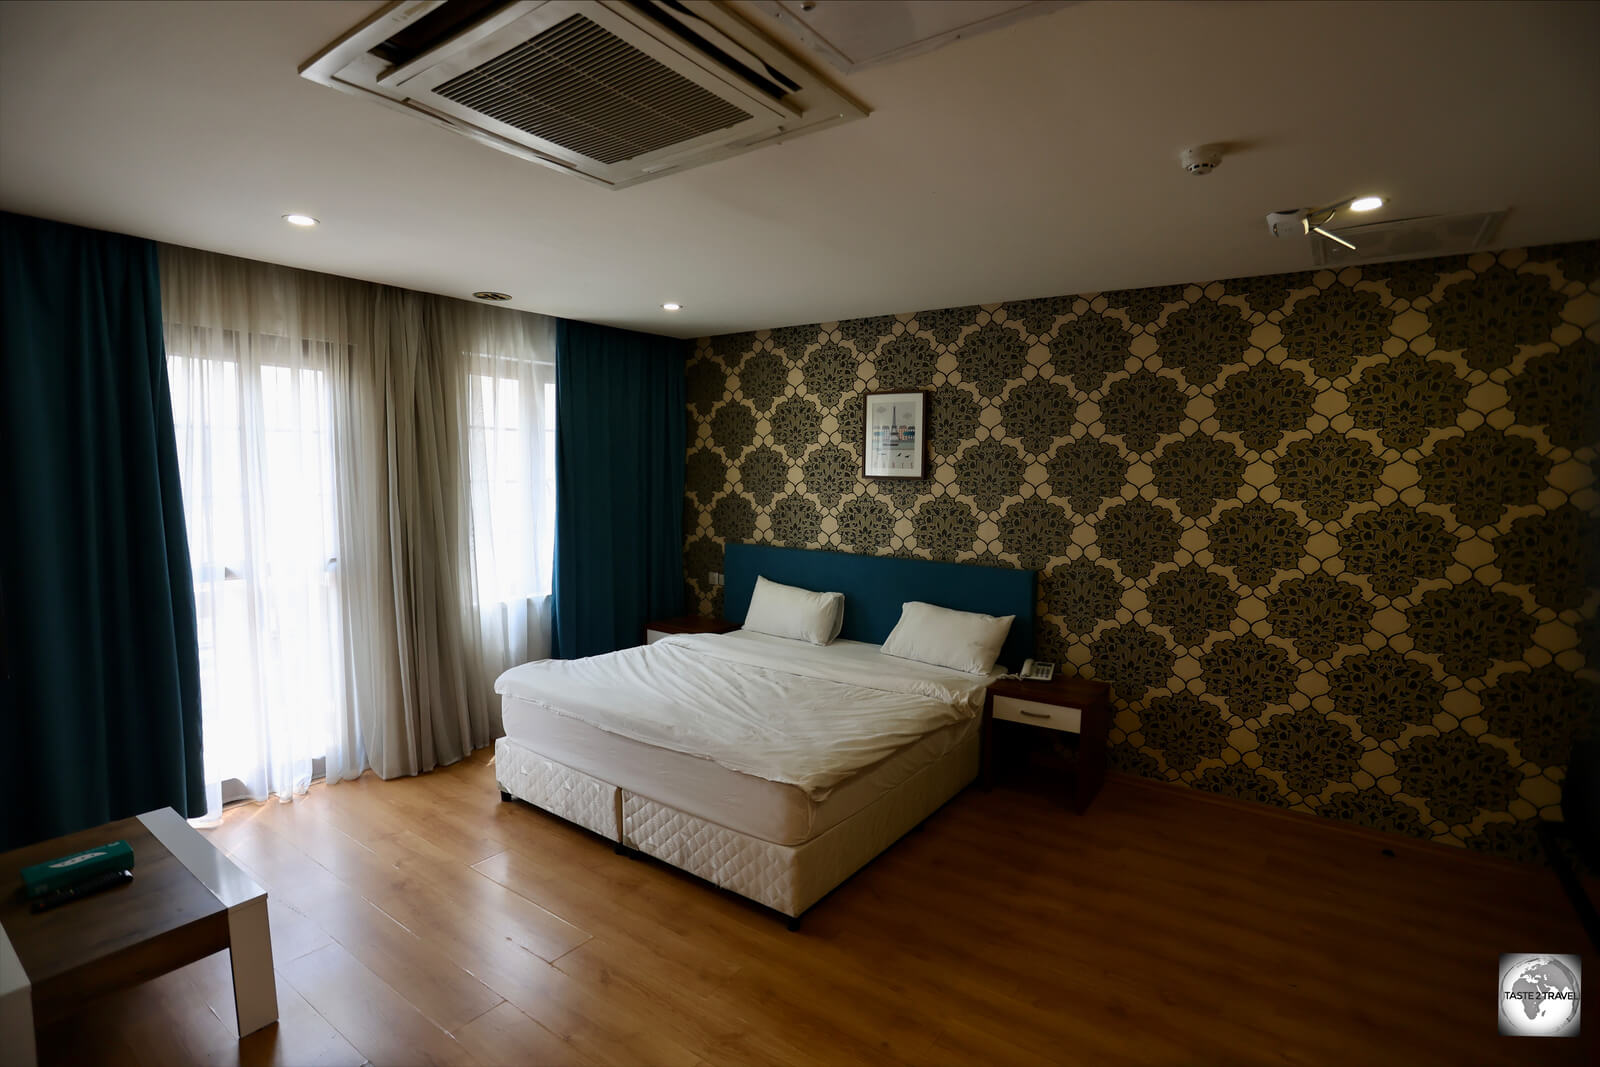 My spacious room at the Khan Saray Hotel in Sulaimaniyah. 